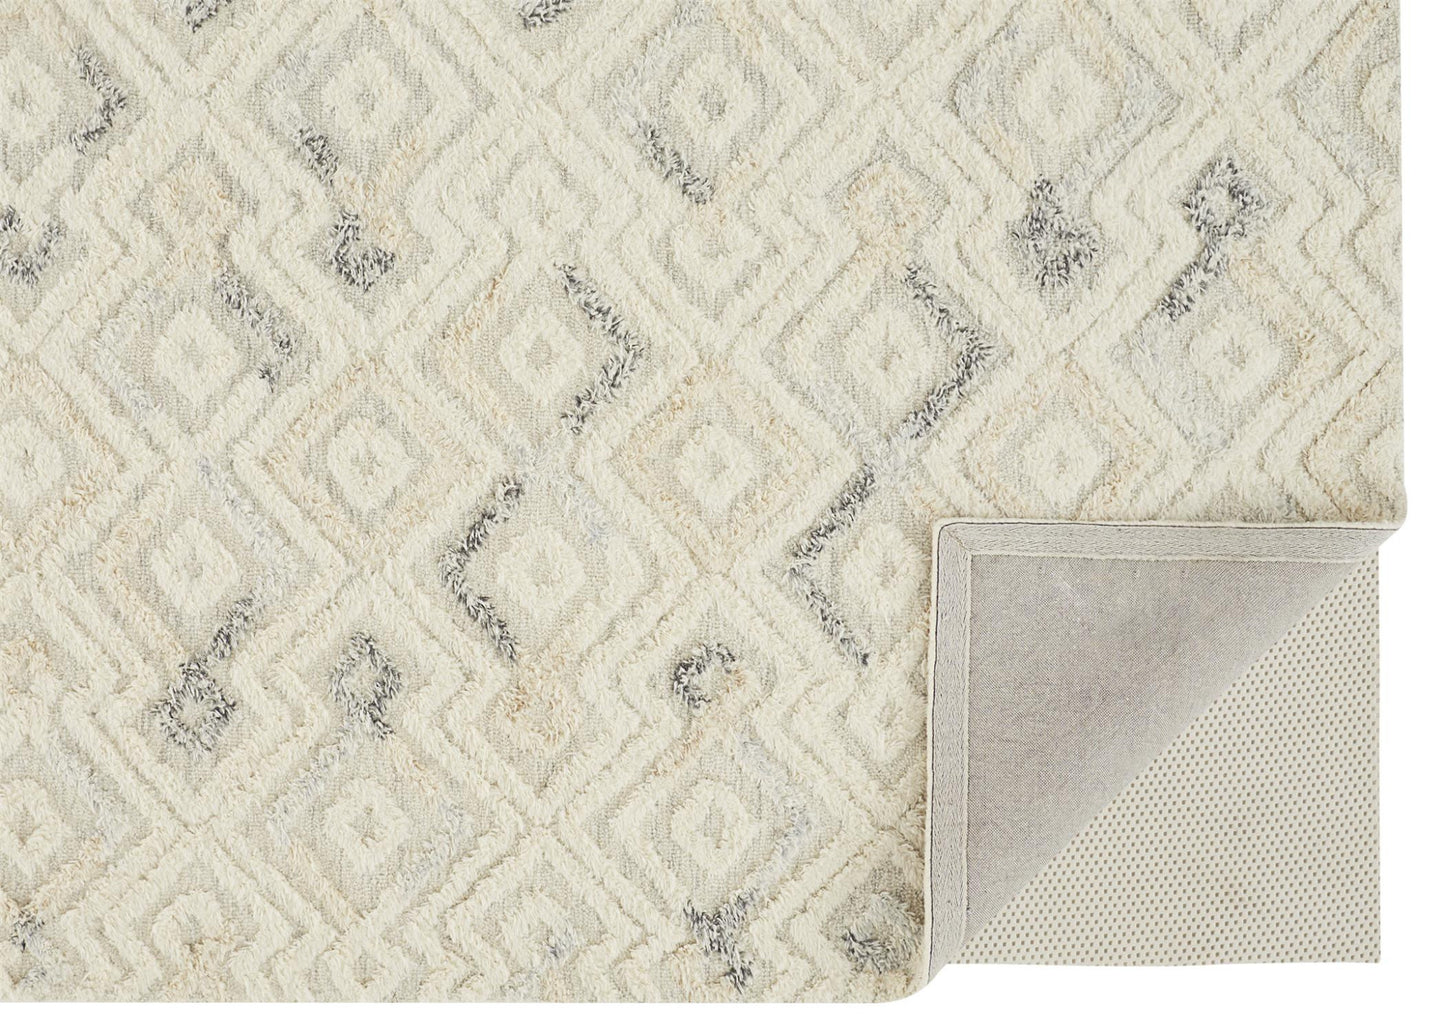 4' X 6' Gray And Ivory Wool Geometric Tufted Handmade Area Rug